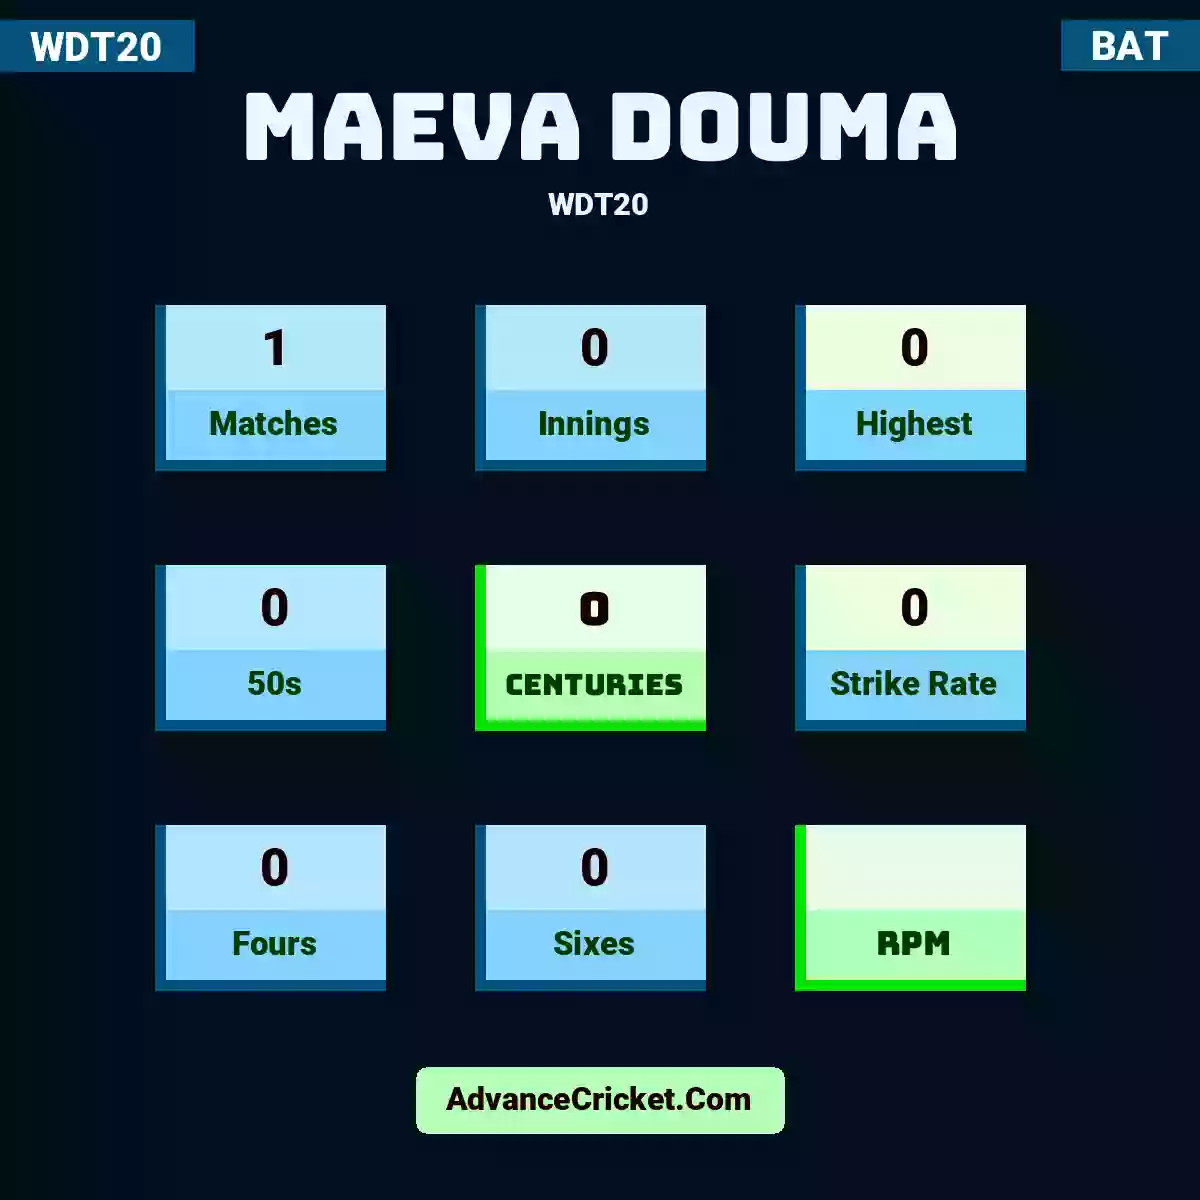 Maeva Douma WDT20 , Maeva Douma played 1 matches, scored 0 runs as highest, 0 half-centuries, and 0 centuries, with a strike rate of 0. M.Douma hit 0 fours and 0 sixes.